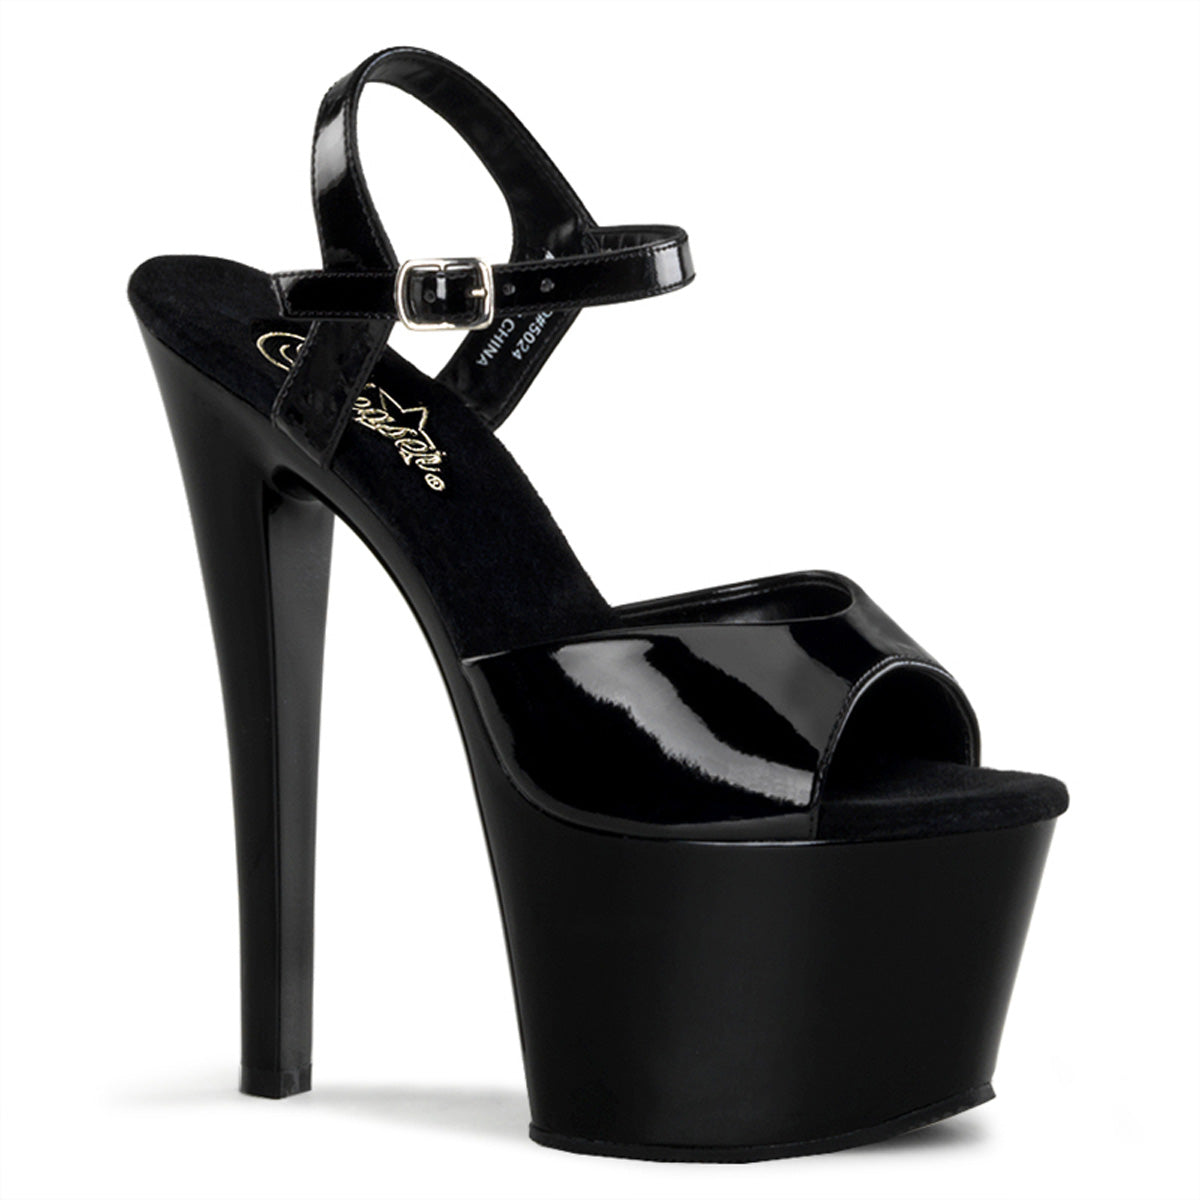 SKY-309 Pleaser 7" Heel Black Patent Pole Dancing Platforms-Pleaser- Sexy Shoes